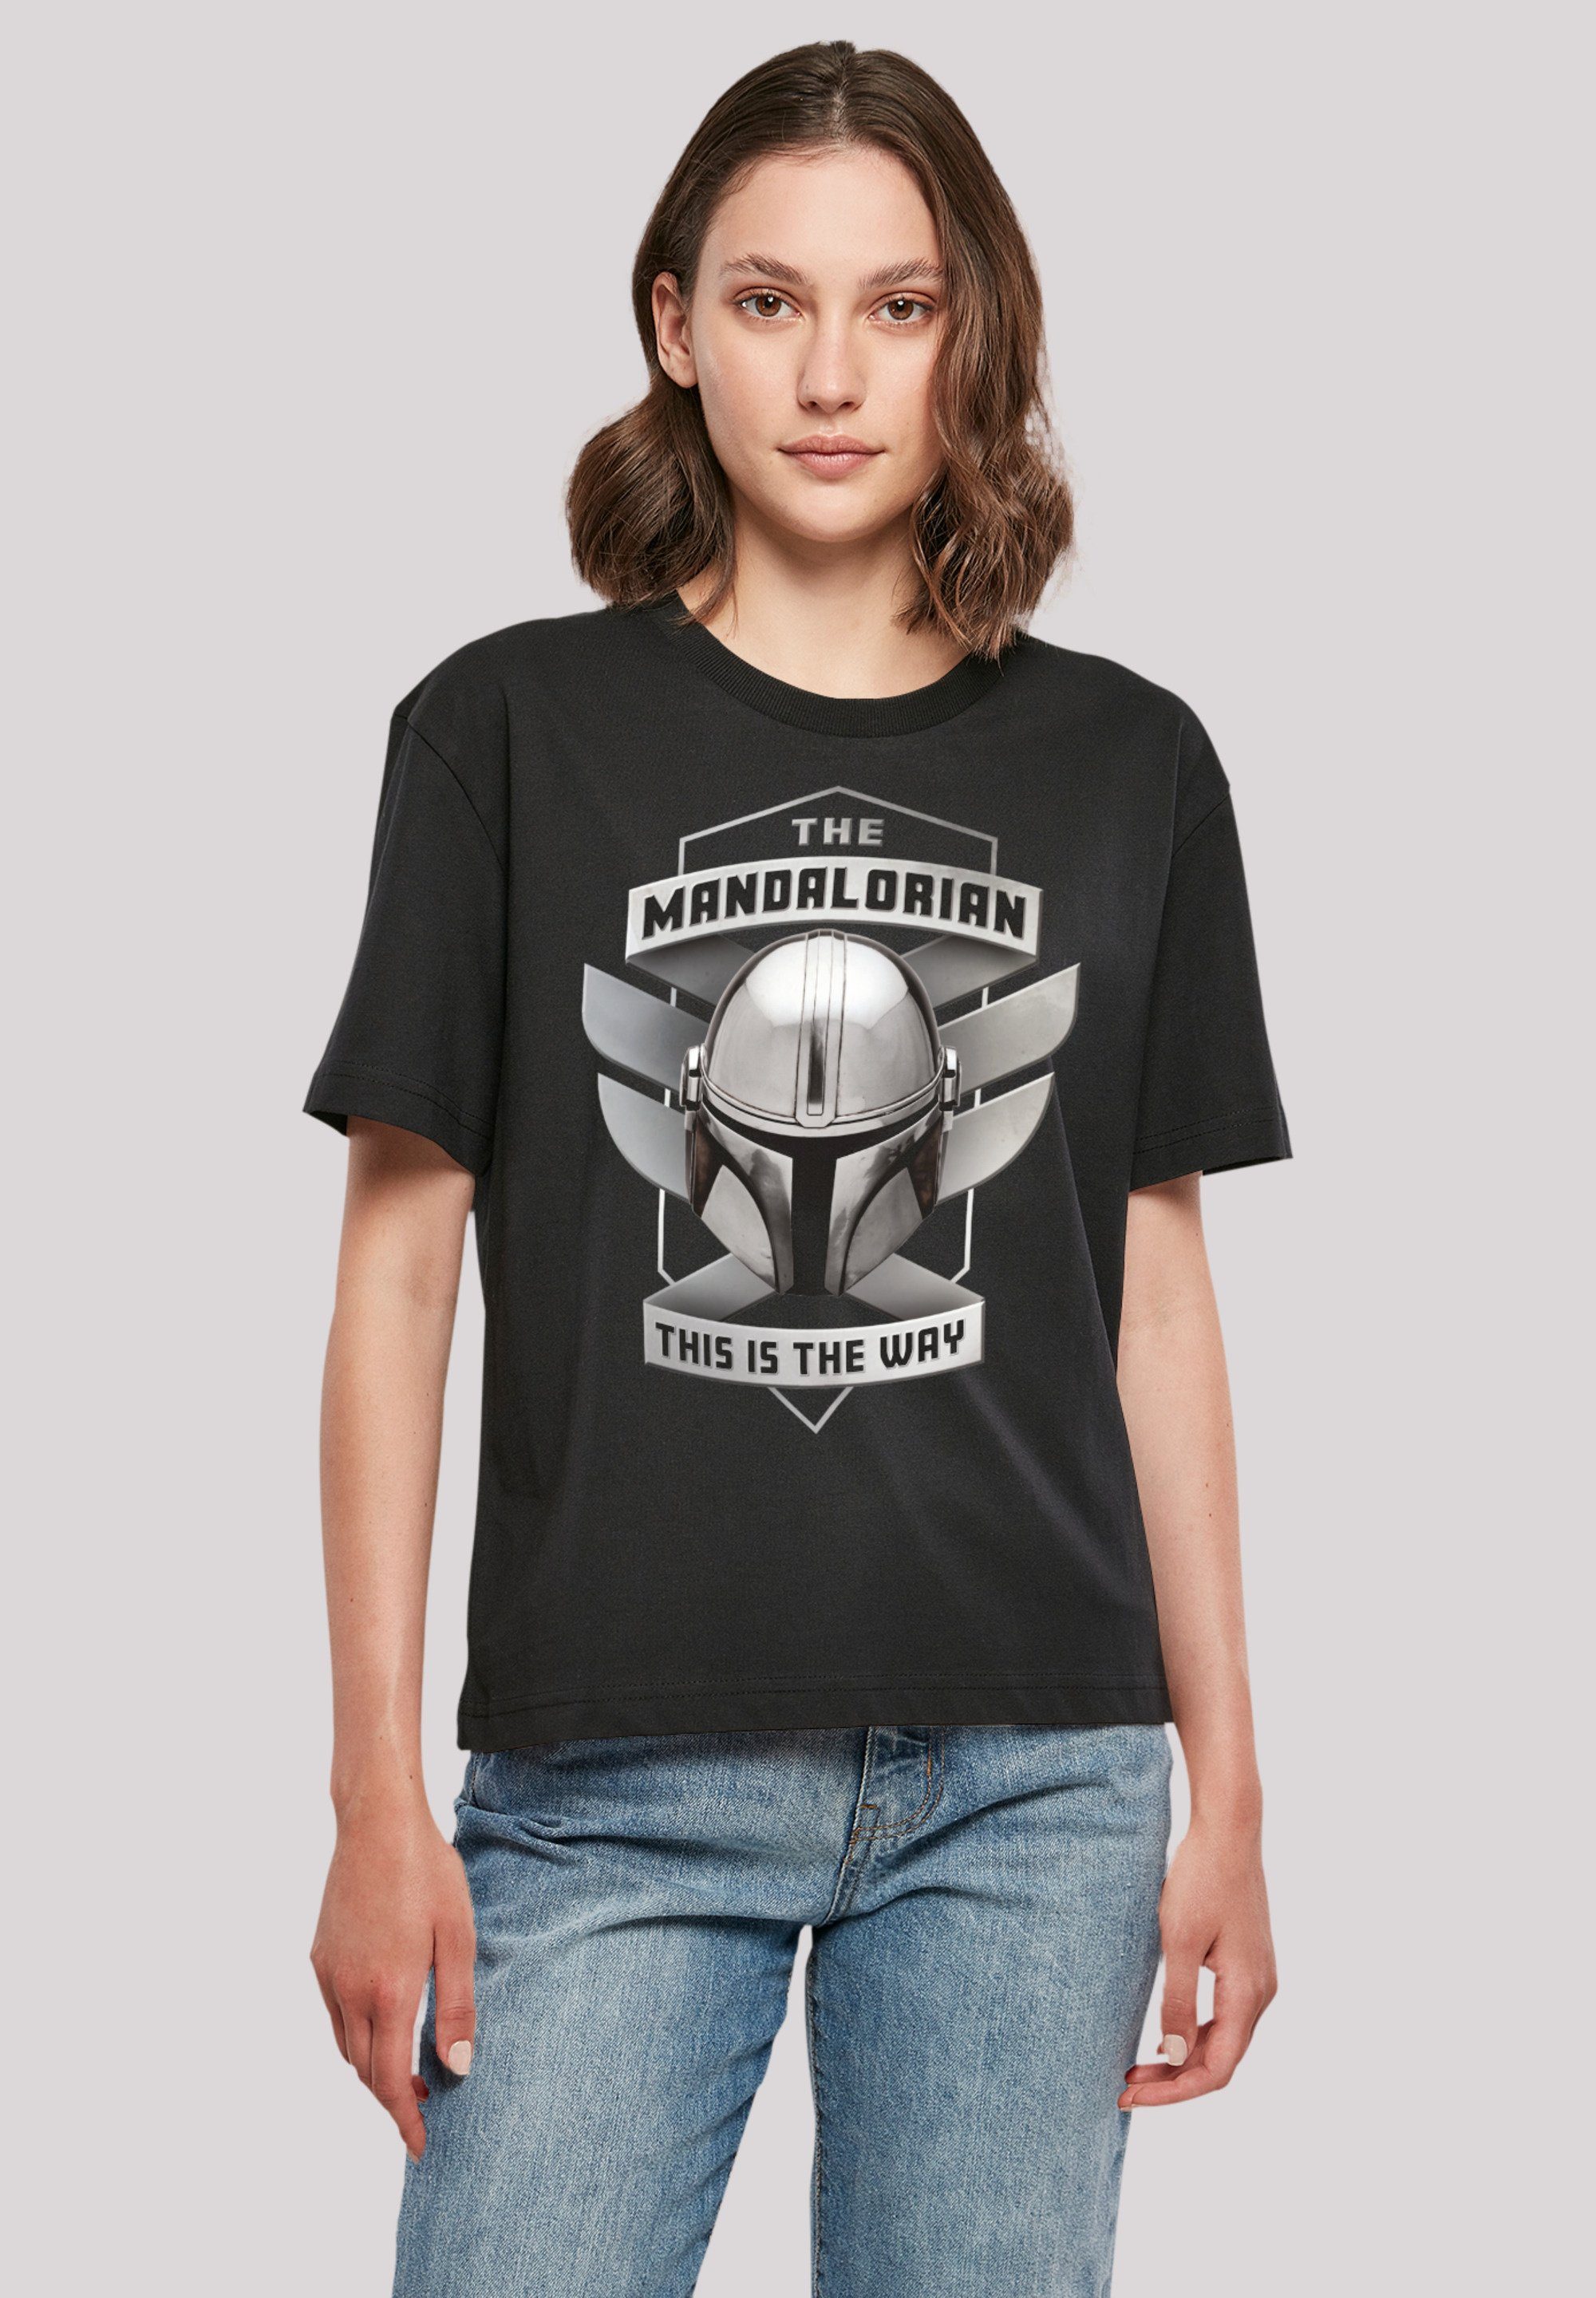 F4NT4STIC T-Shirt Star Wars The Mandalorian This Is The Way Premium Qualität